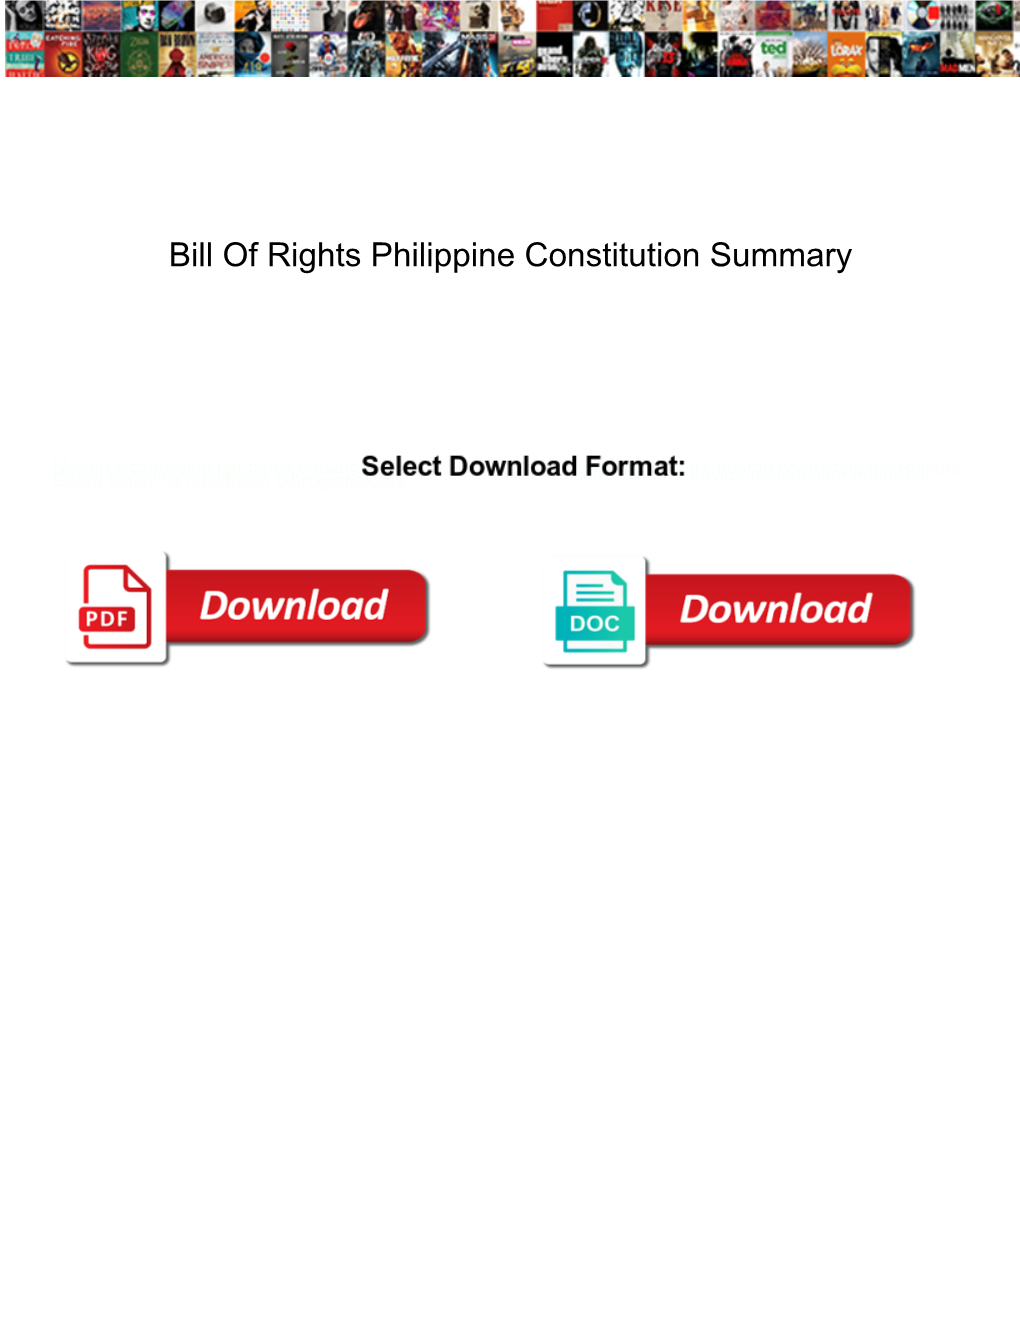 Bill of Rights Philippine Constitution Summary